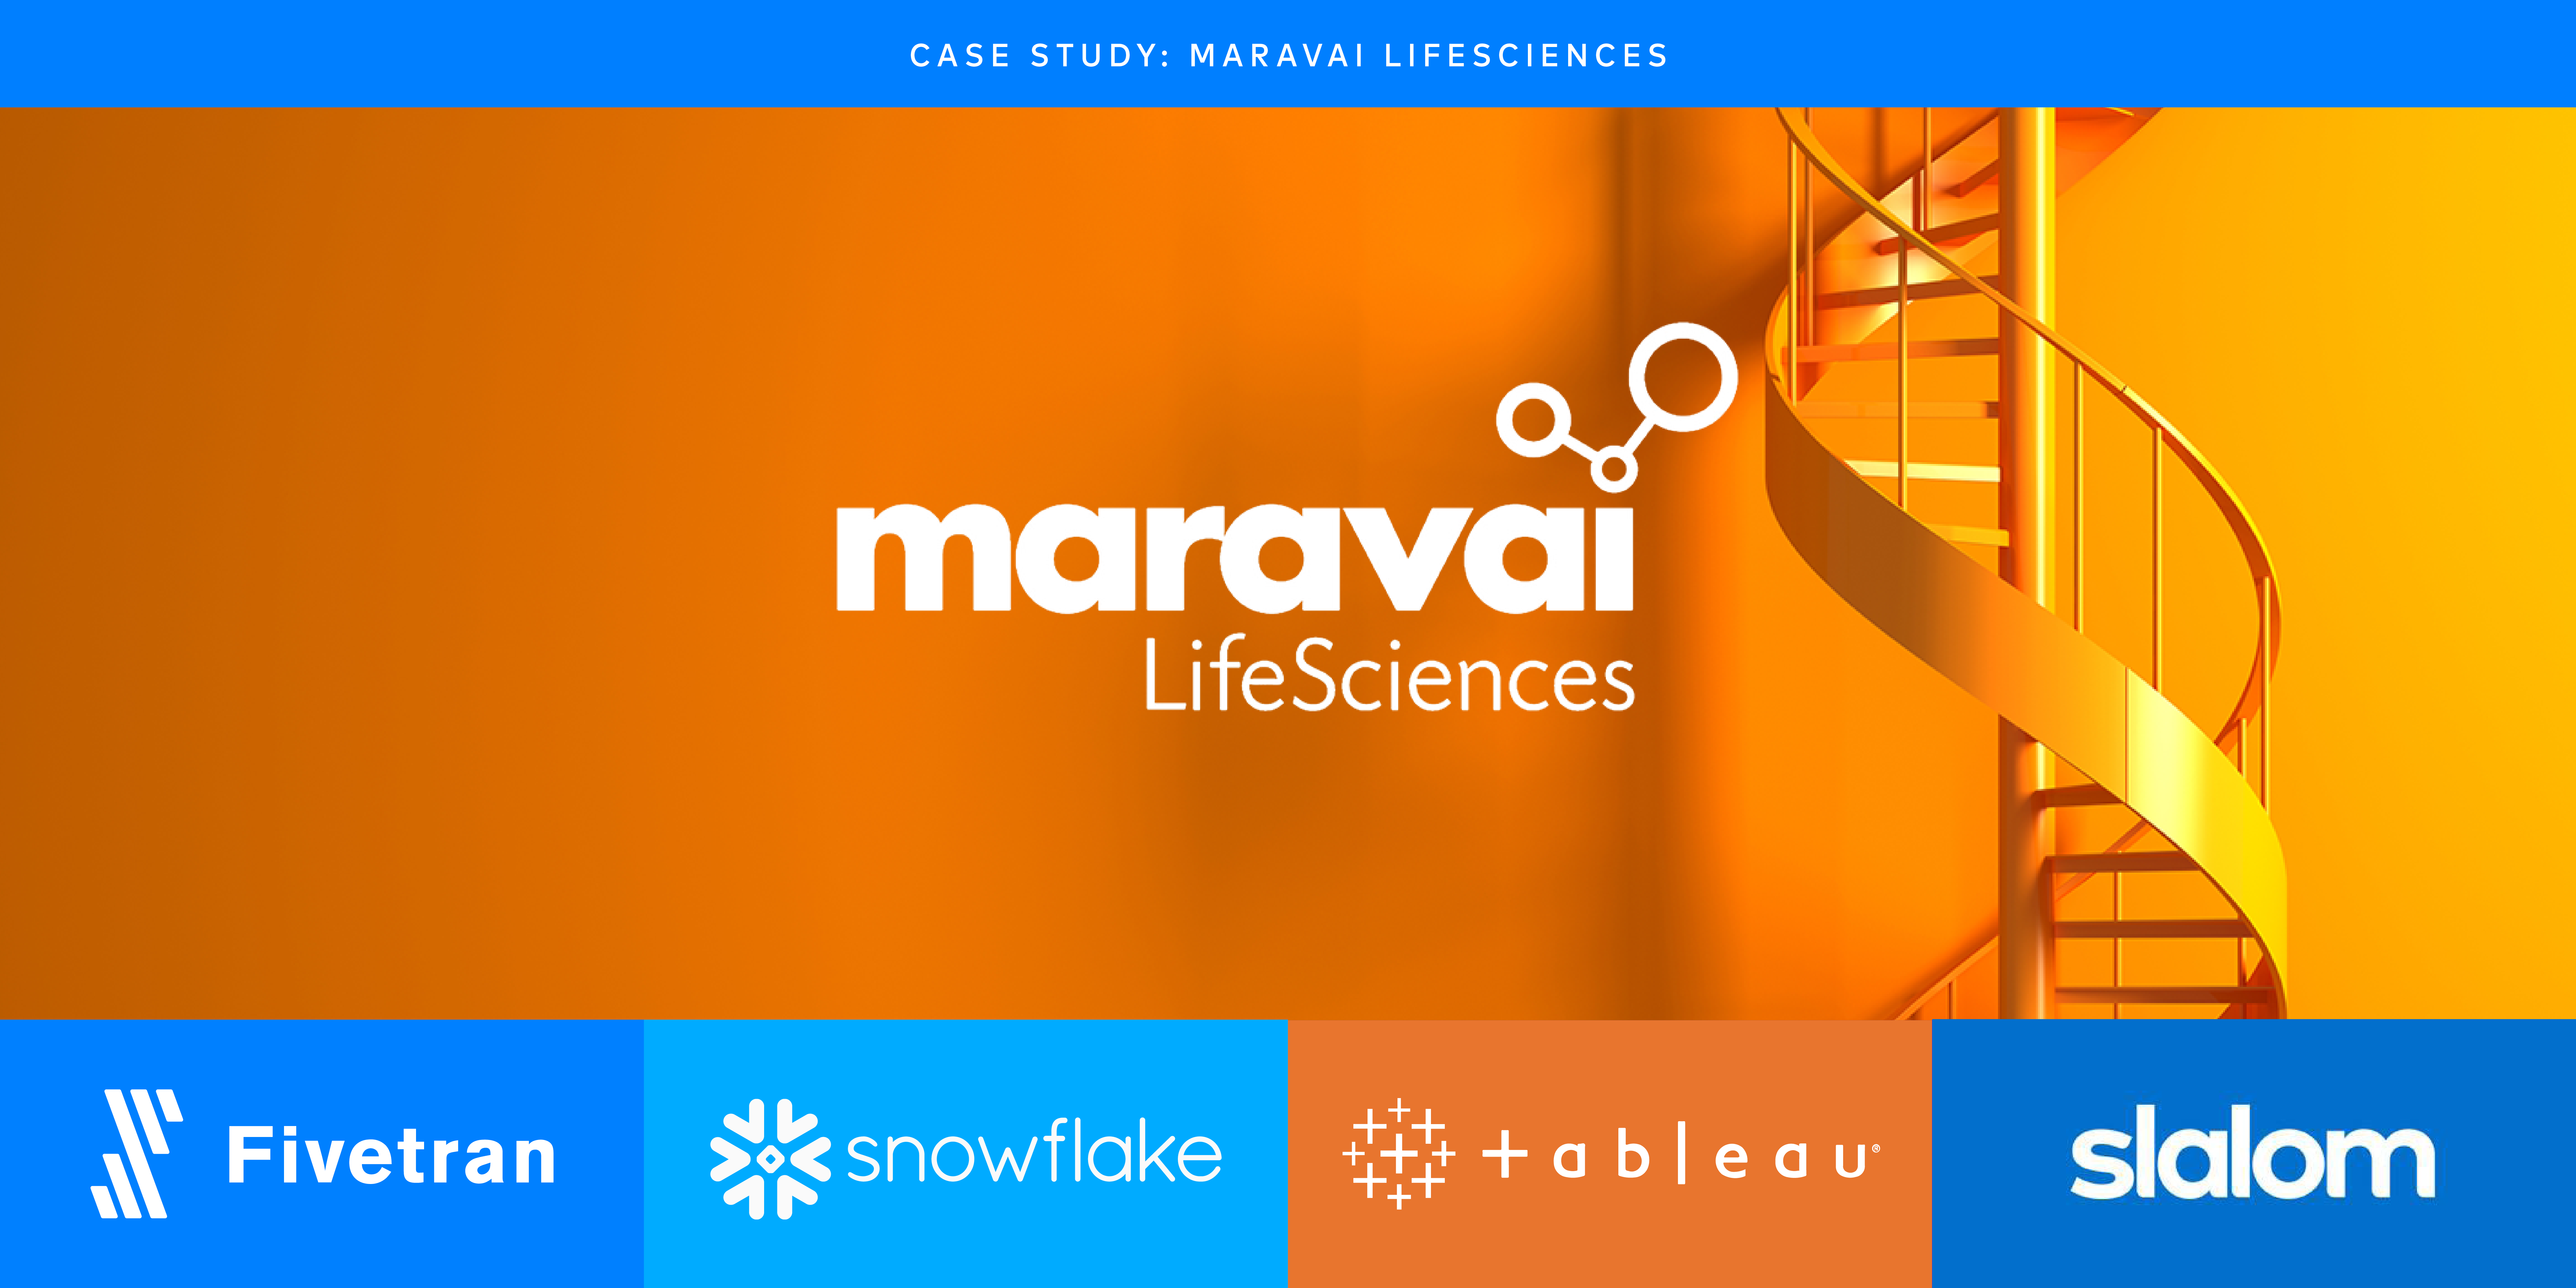 Maravai LifeSciences modernizes financial analytics